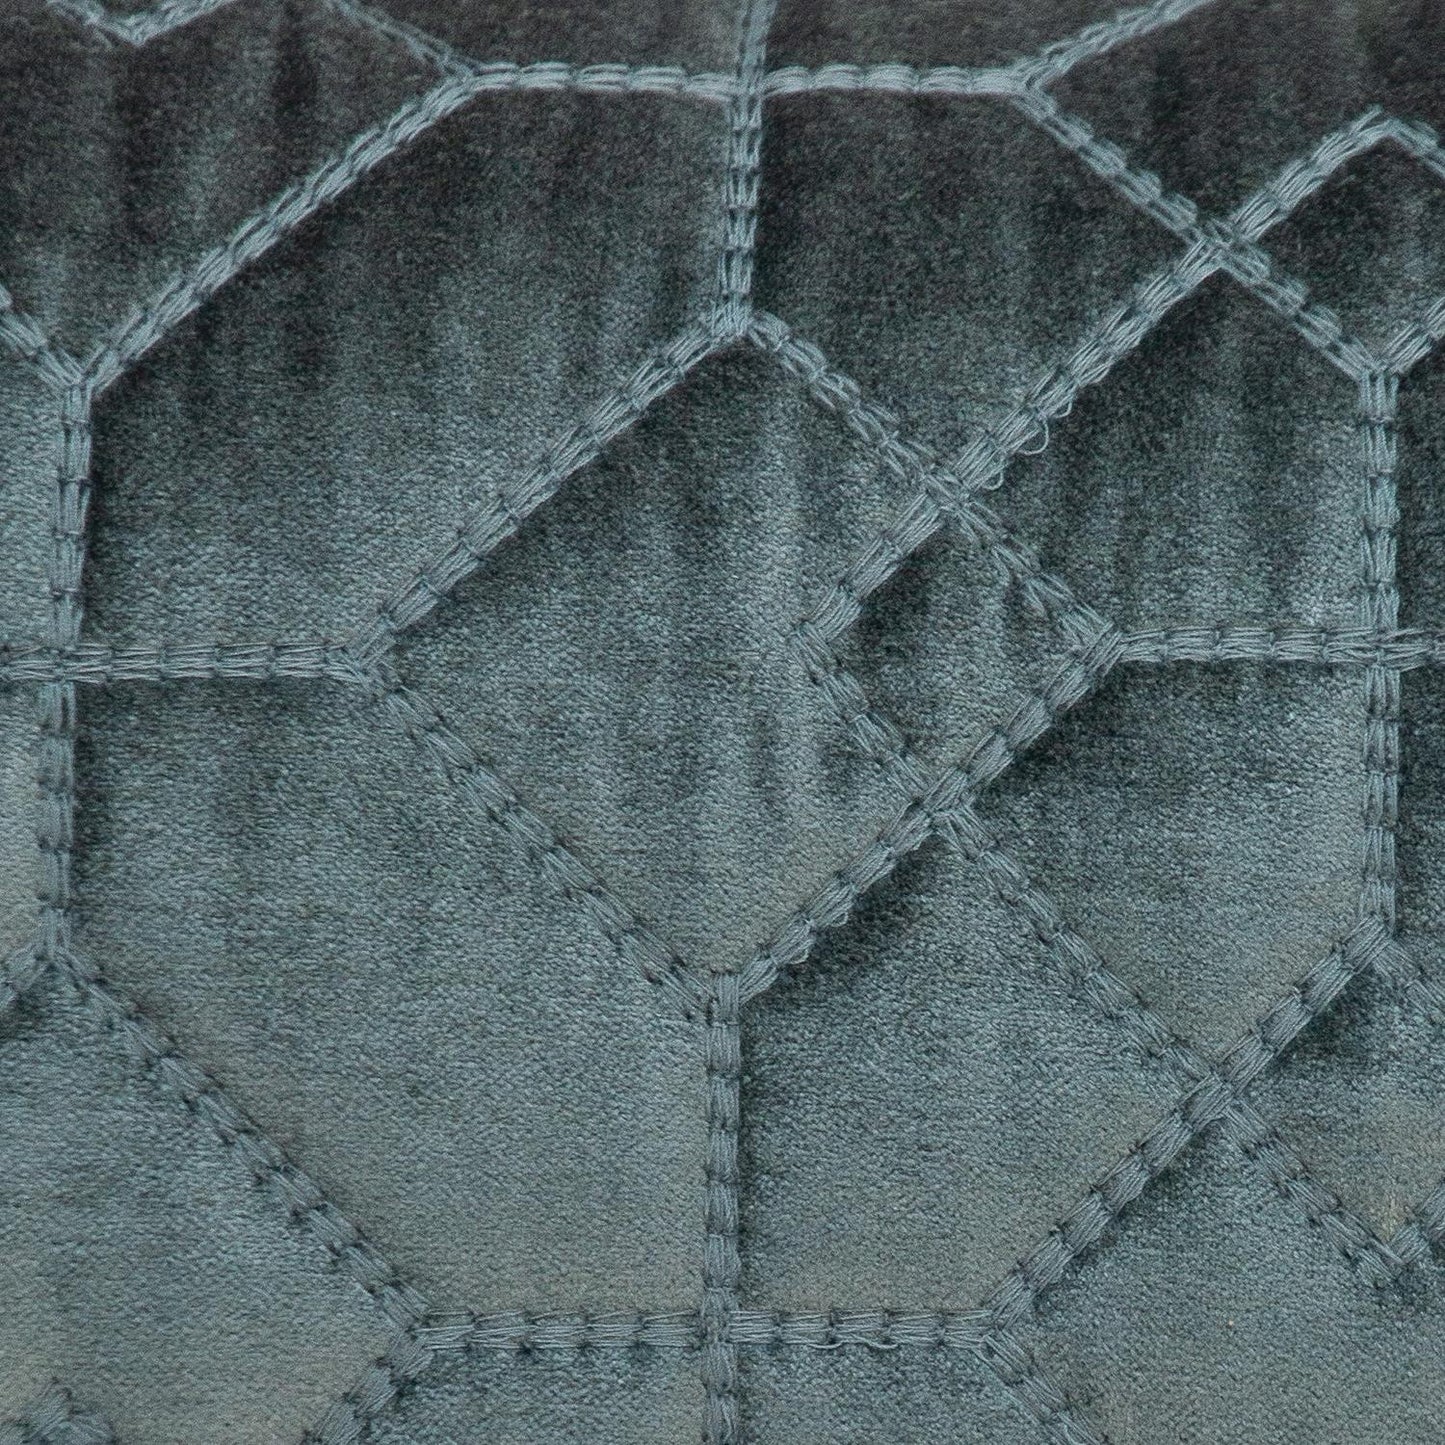 Charcoal Quilted Velvet Geo Lumbar Decorative Pillow